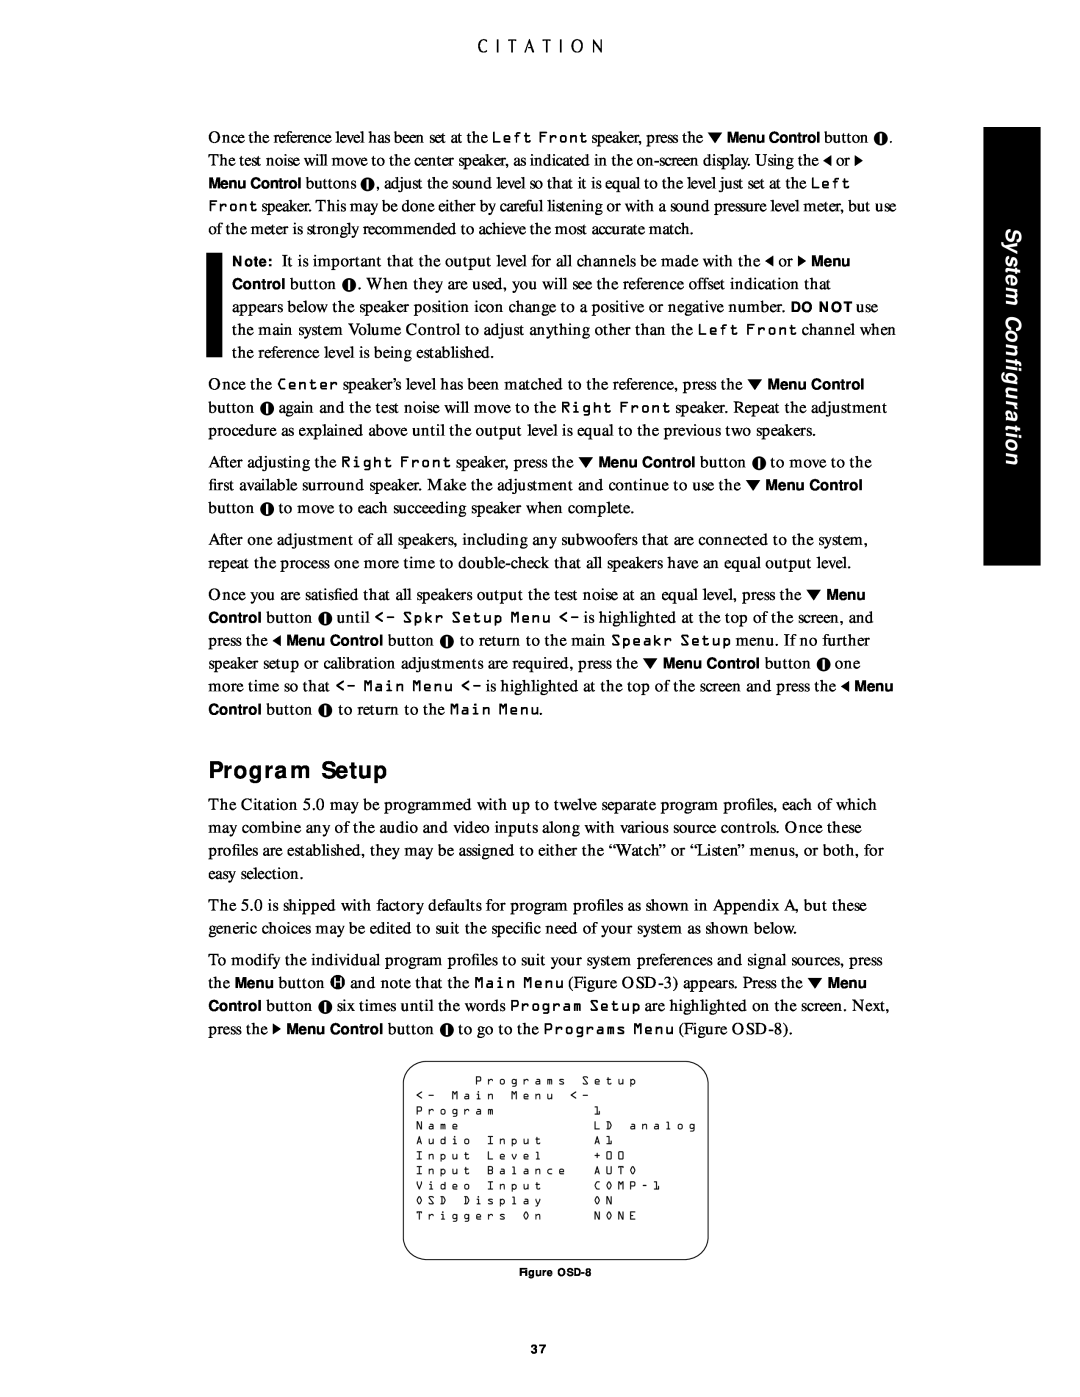 Citation Stereo Receiver owner manual Program Setup, System Conﬁguration, Figure OSD-8 